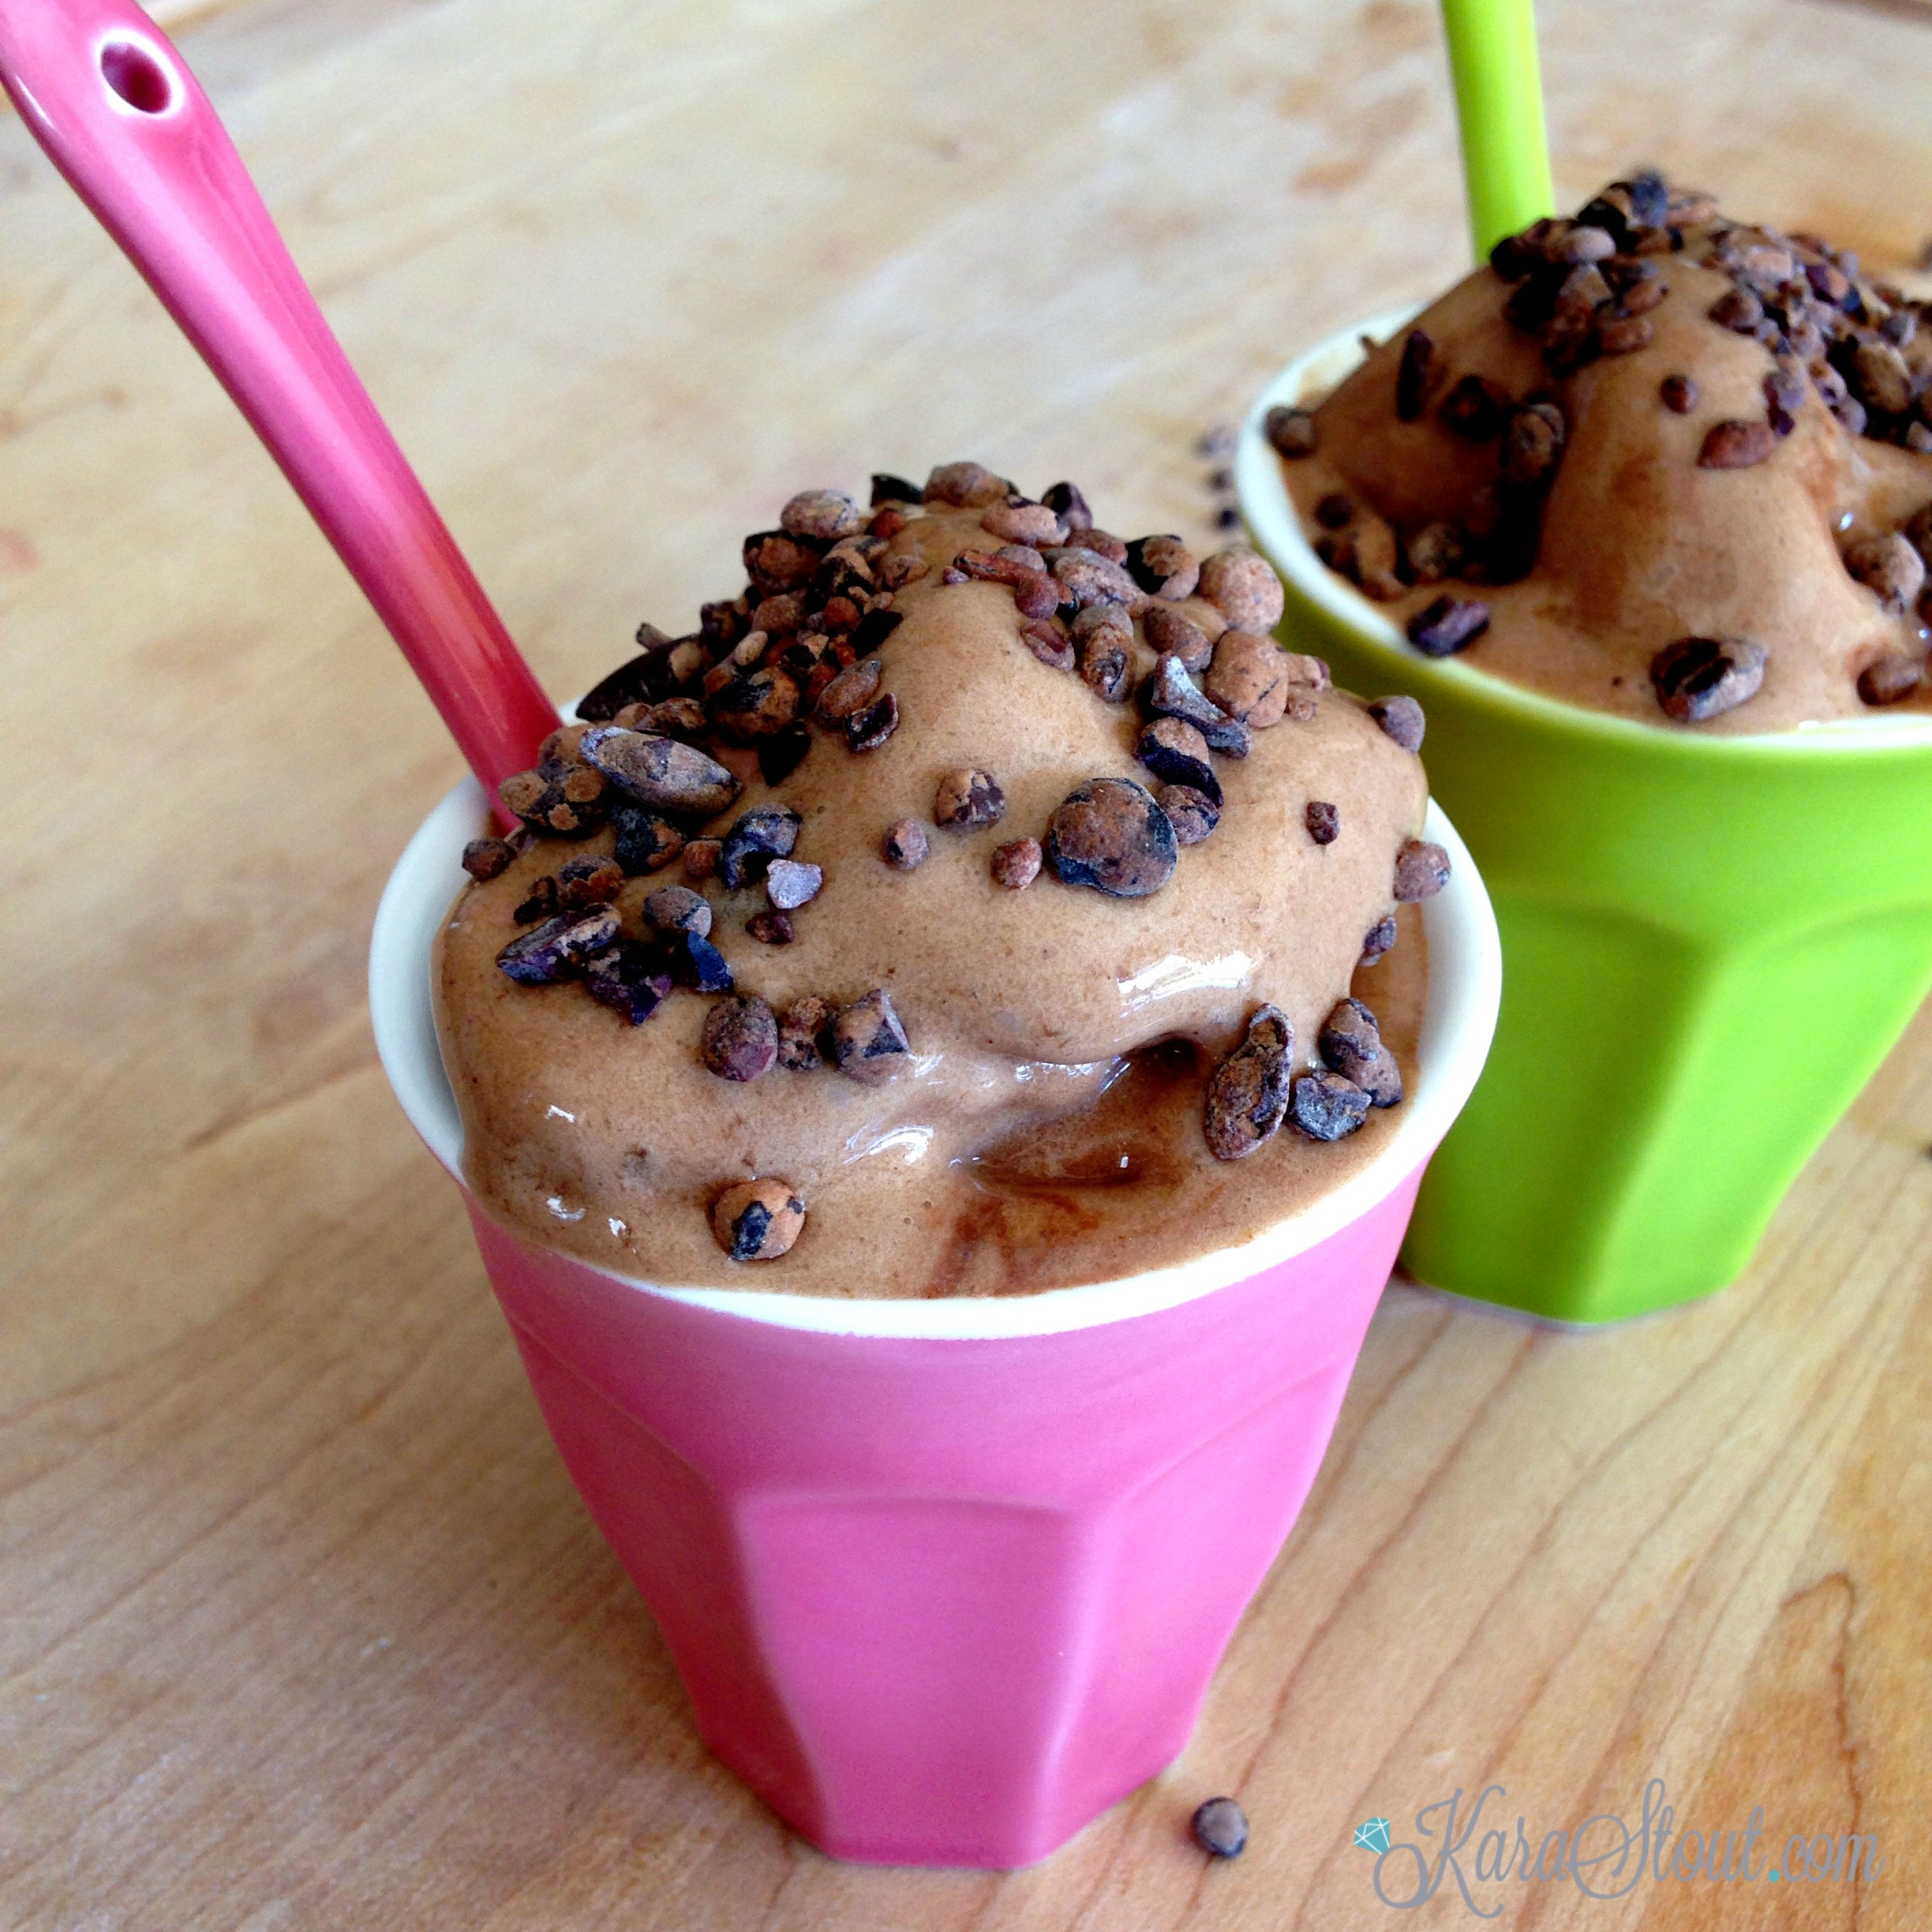 Creamy Chocolate Banana Ice Cream with Sprinkles